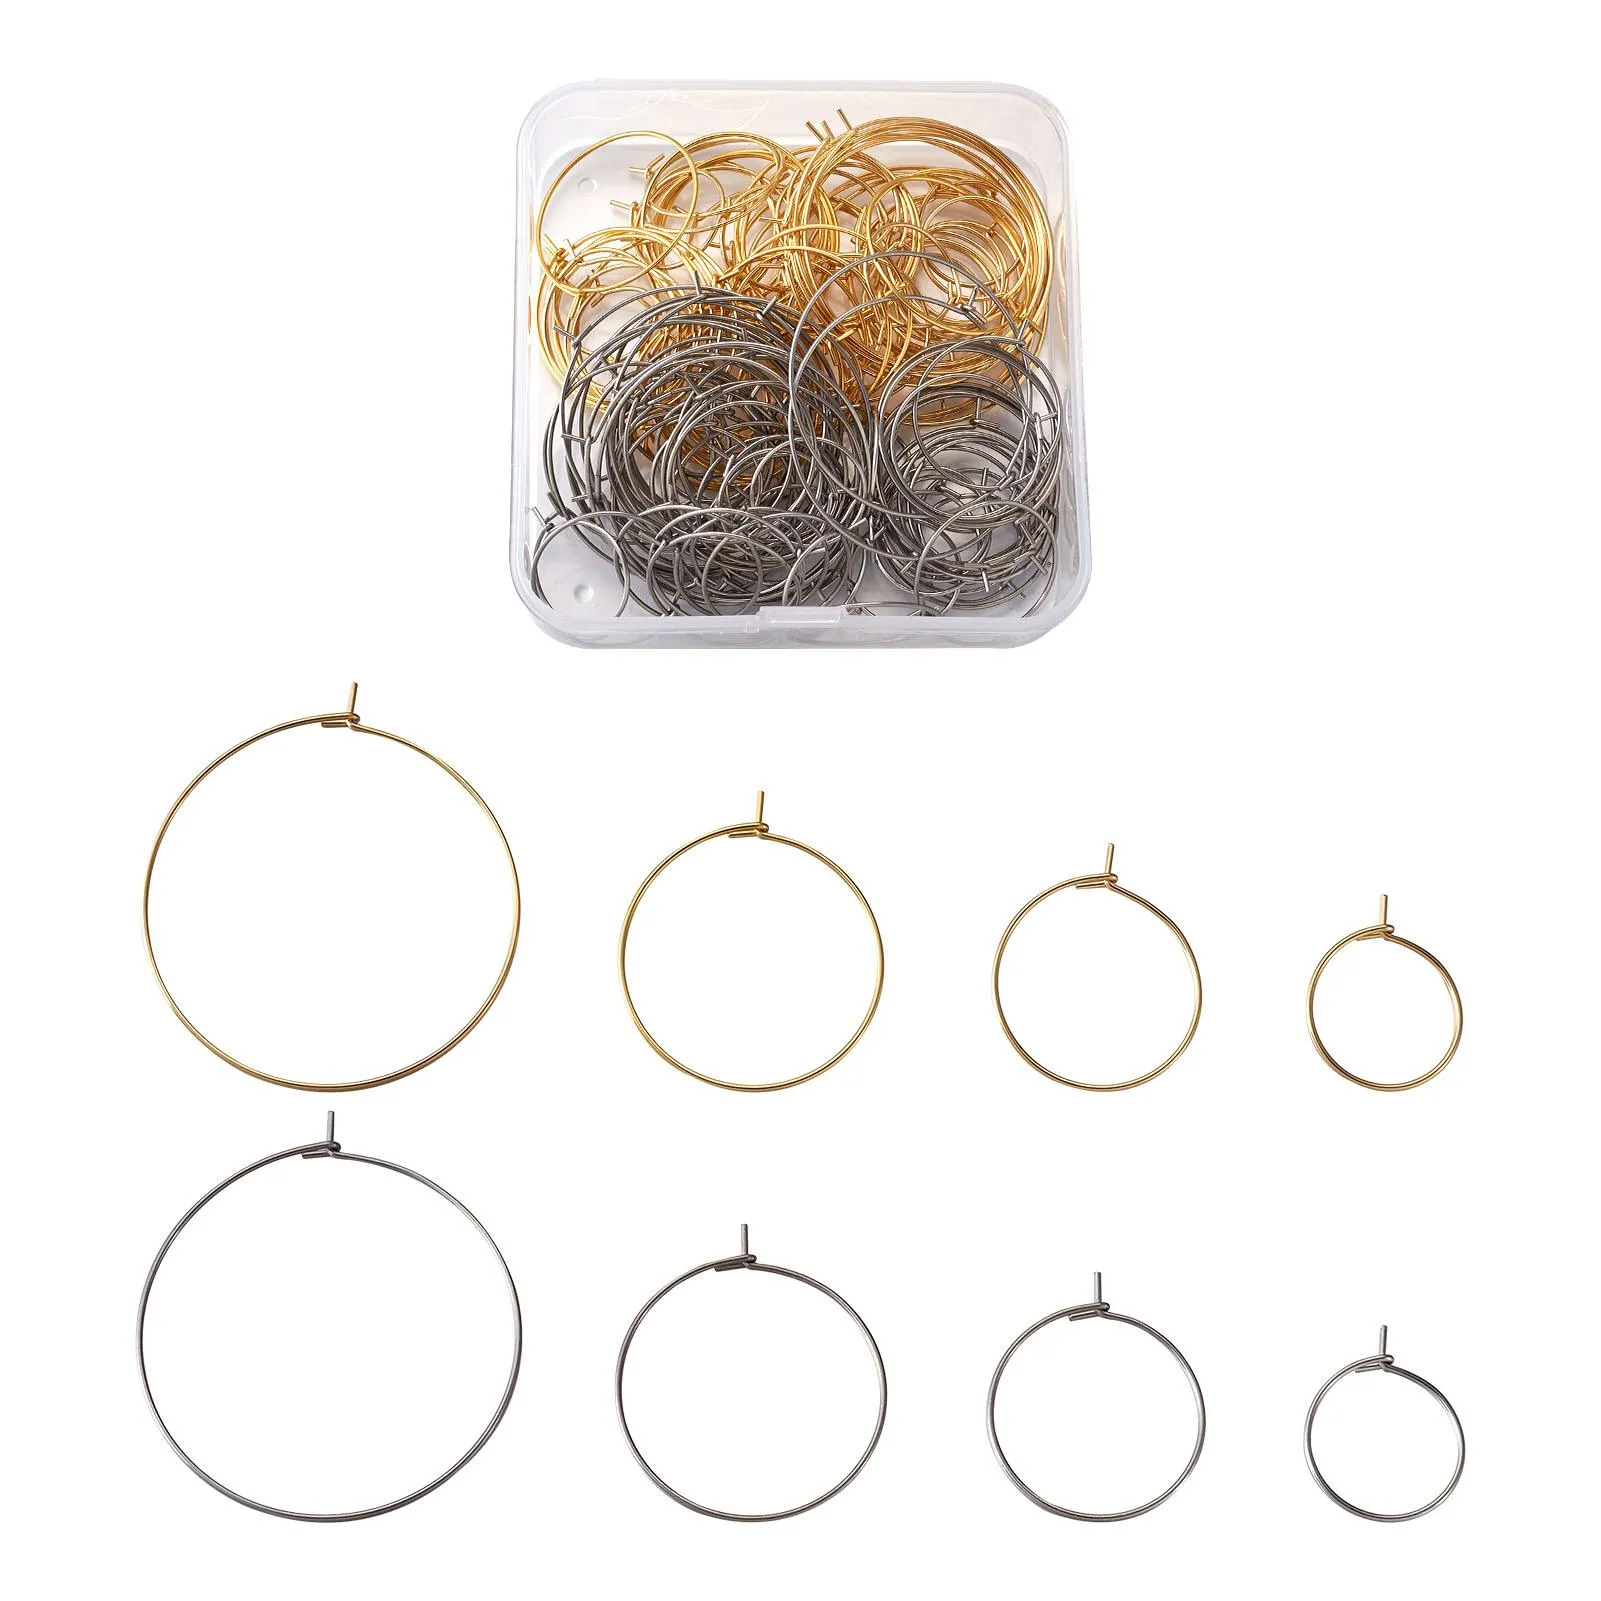 Huggie 1 Box Stainless Steel Wine Glass Charms Rings Hoop Earrings For DIY Jewelry Making Earring Findings Accessories Decor